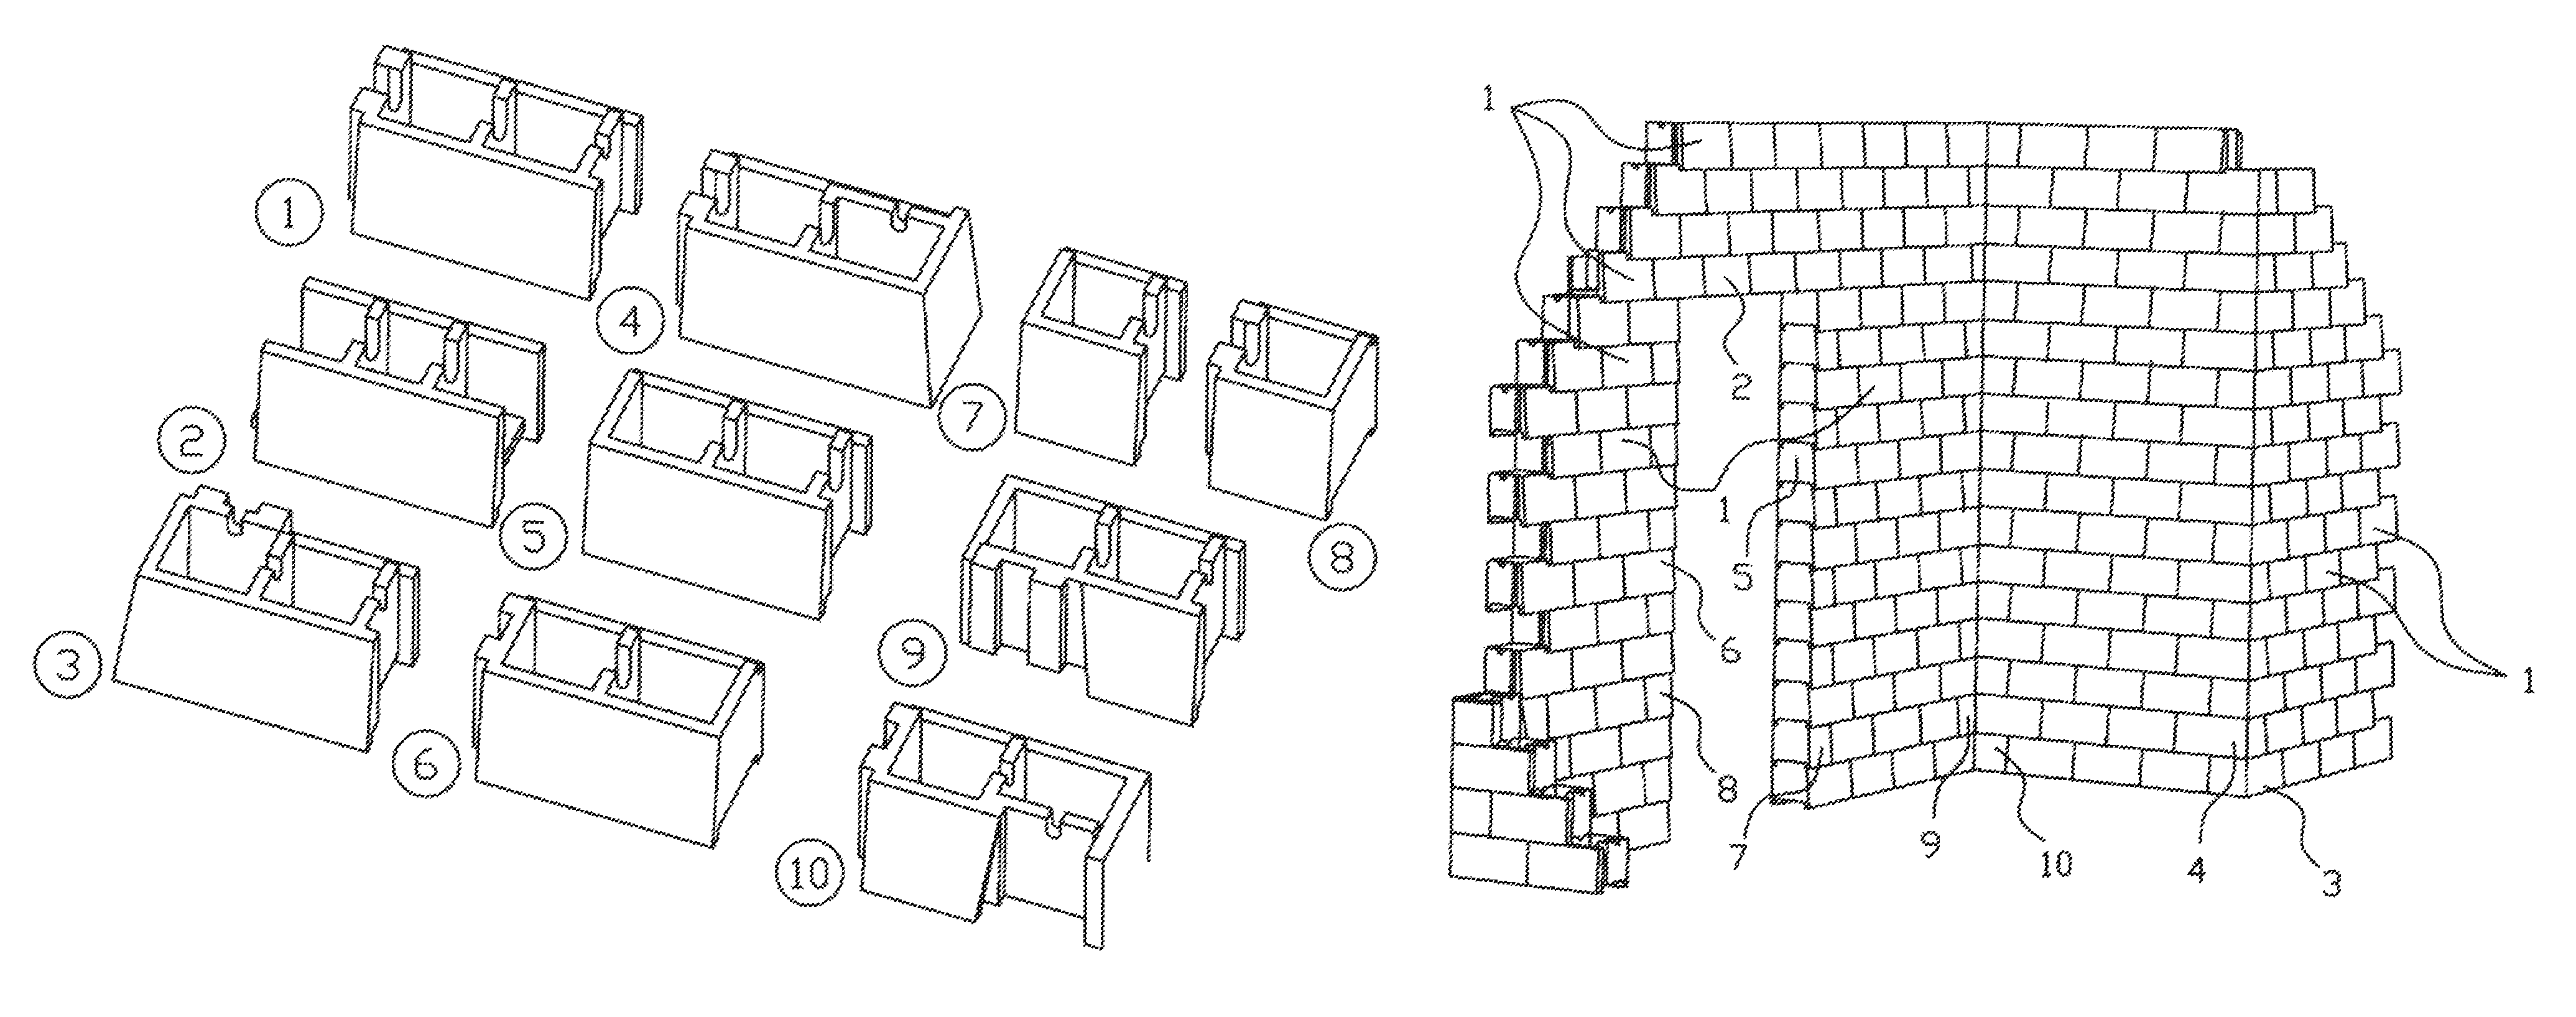 Interlocking concrete blocks with trapezoidal shape